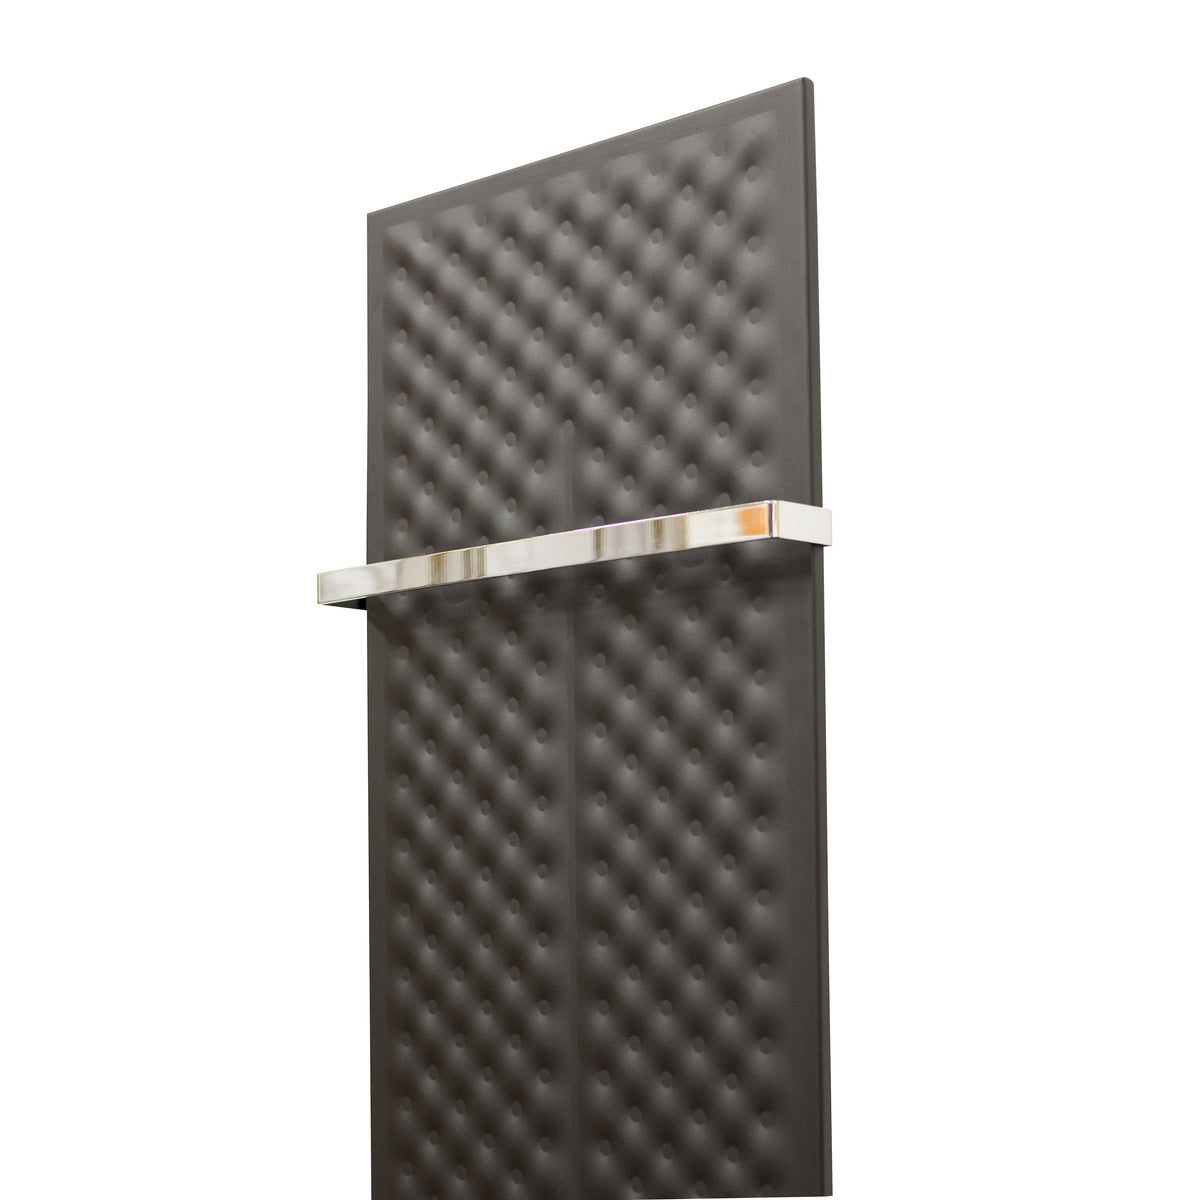 Designer Inno Style 1600 mm High x 450 mm Wide Heated Towel Rail Radiator Black - Elegant Radiators